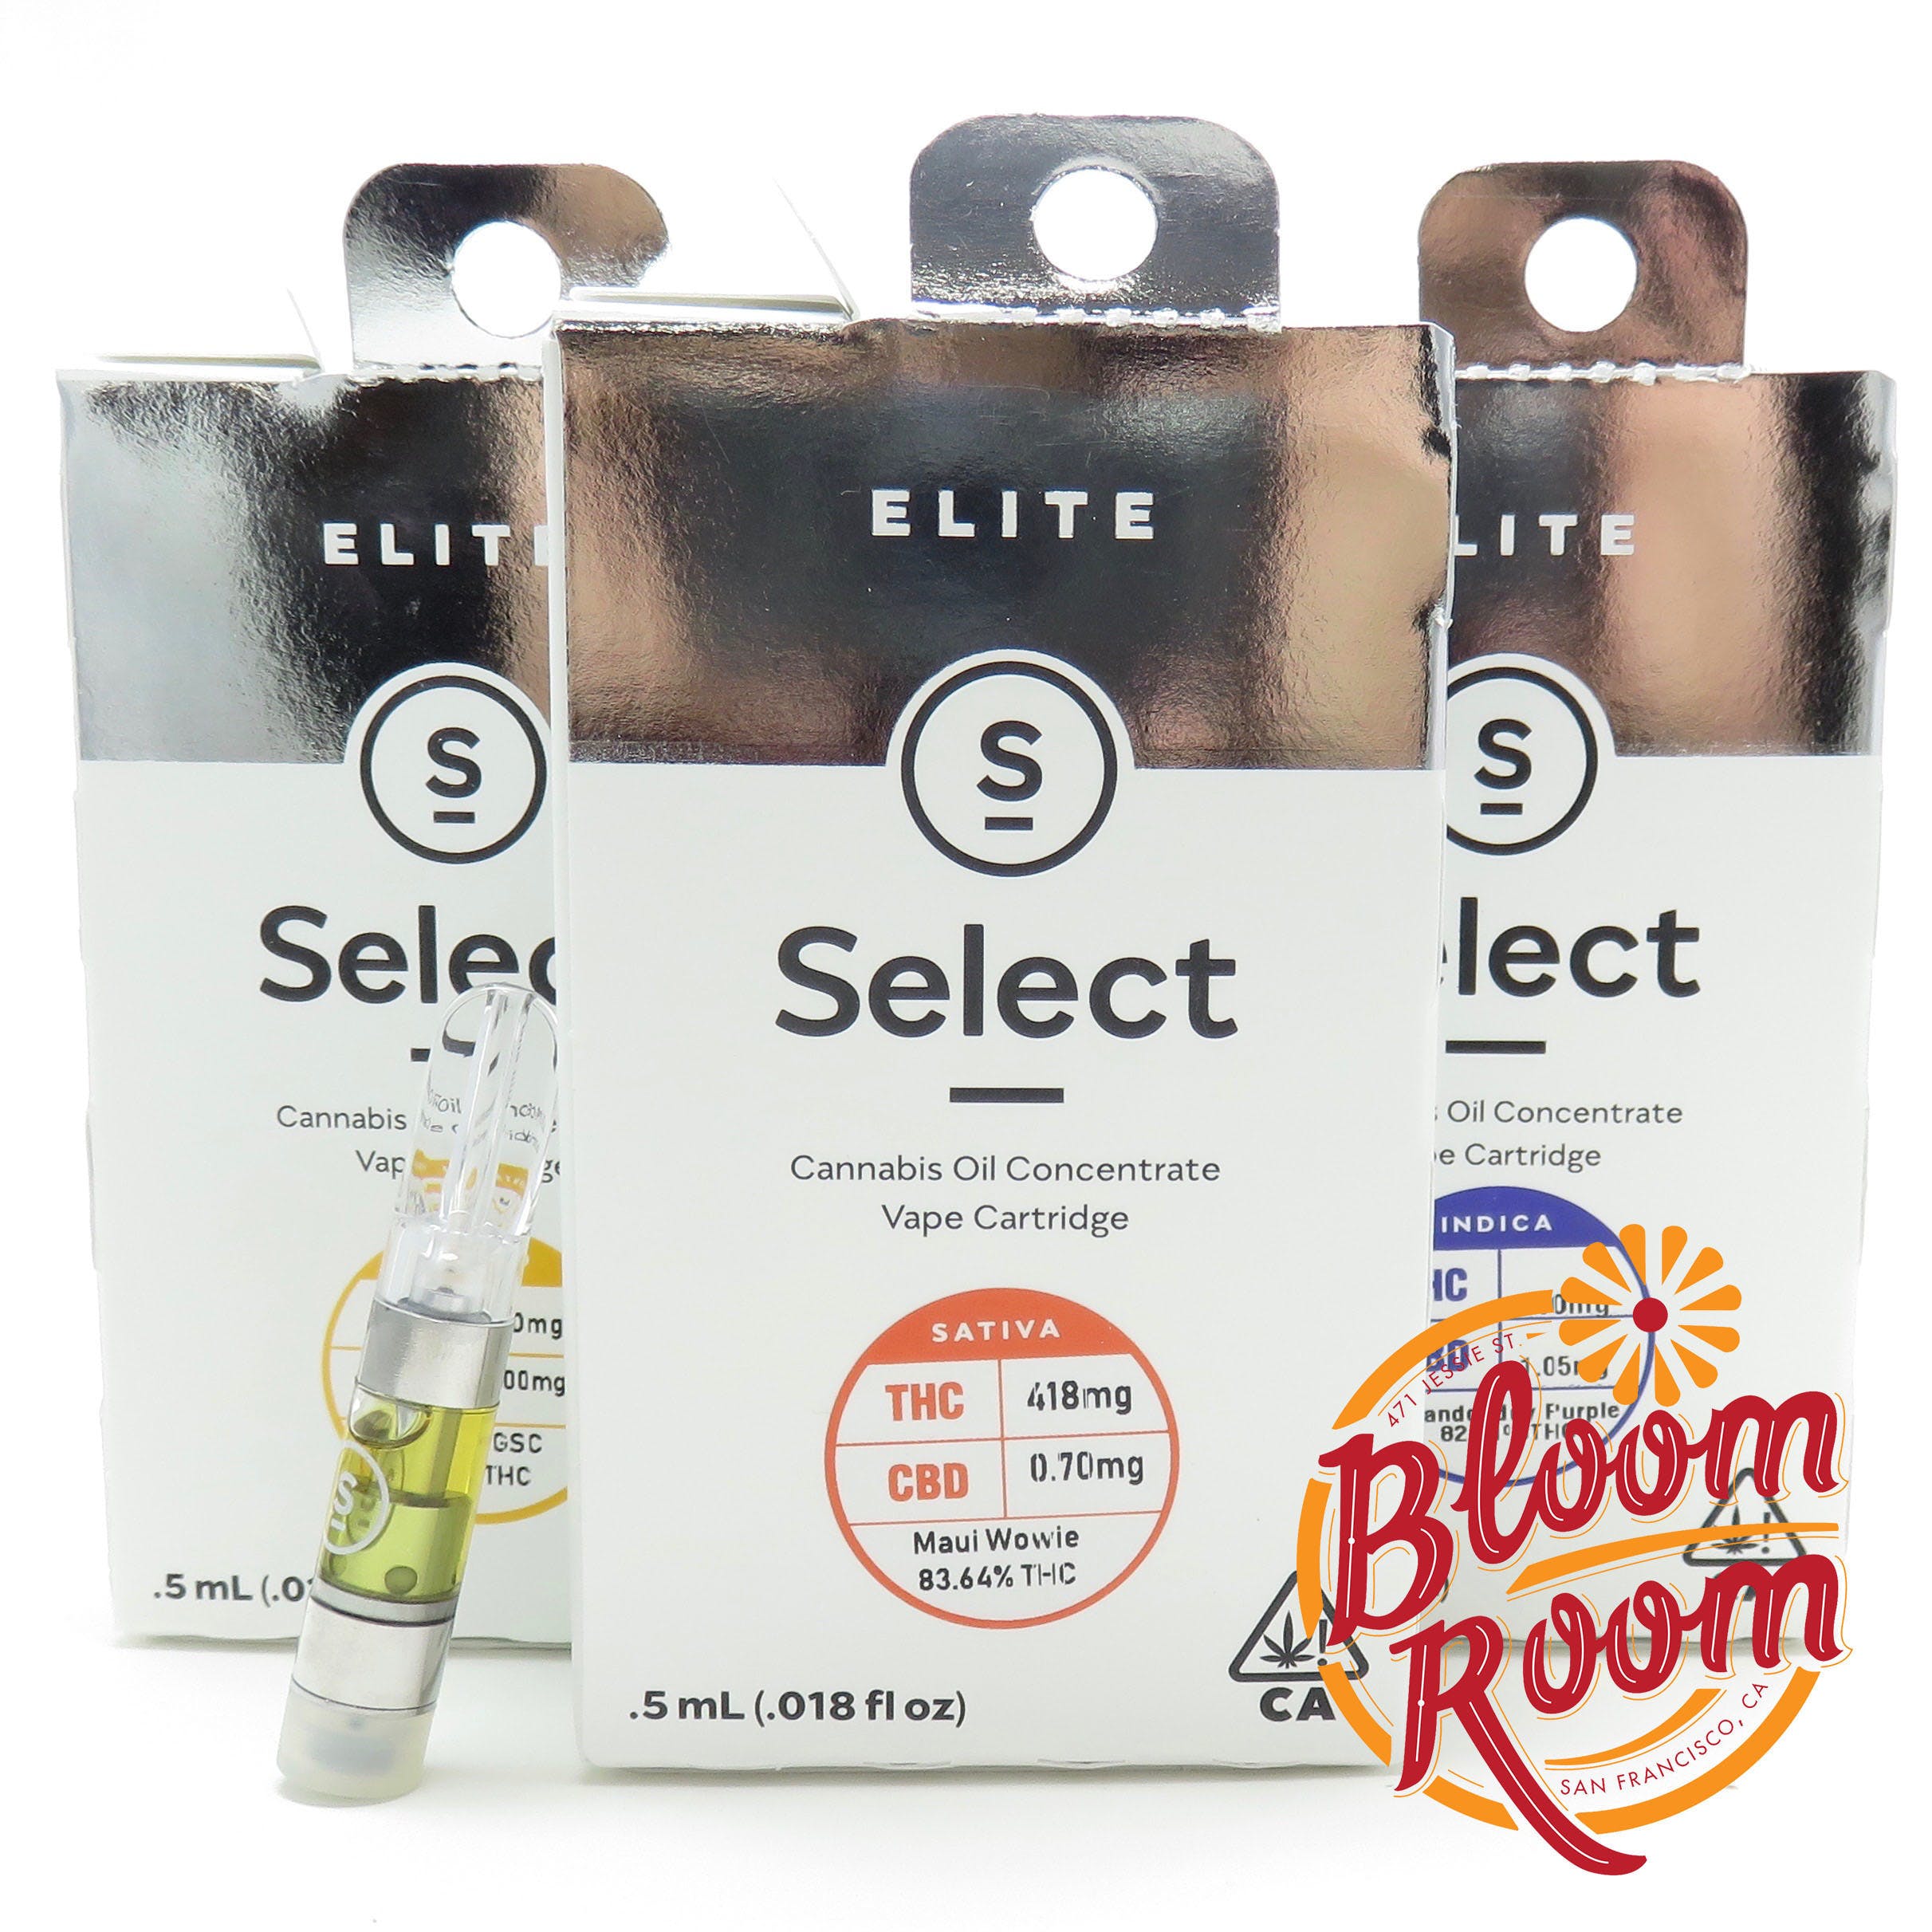 Select - Elite Cart - Jillybean